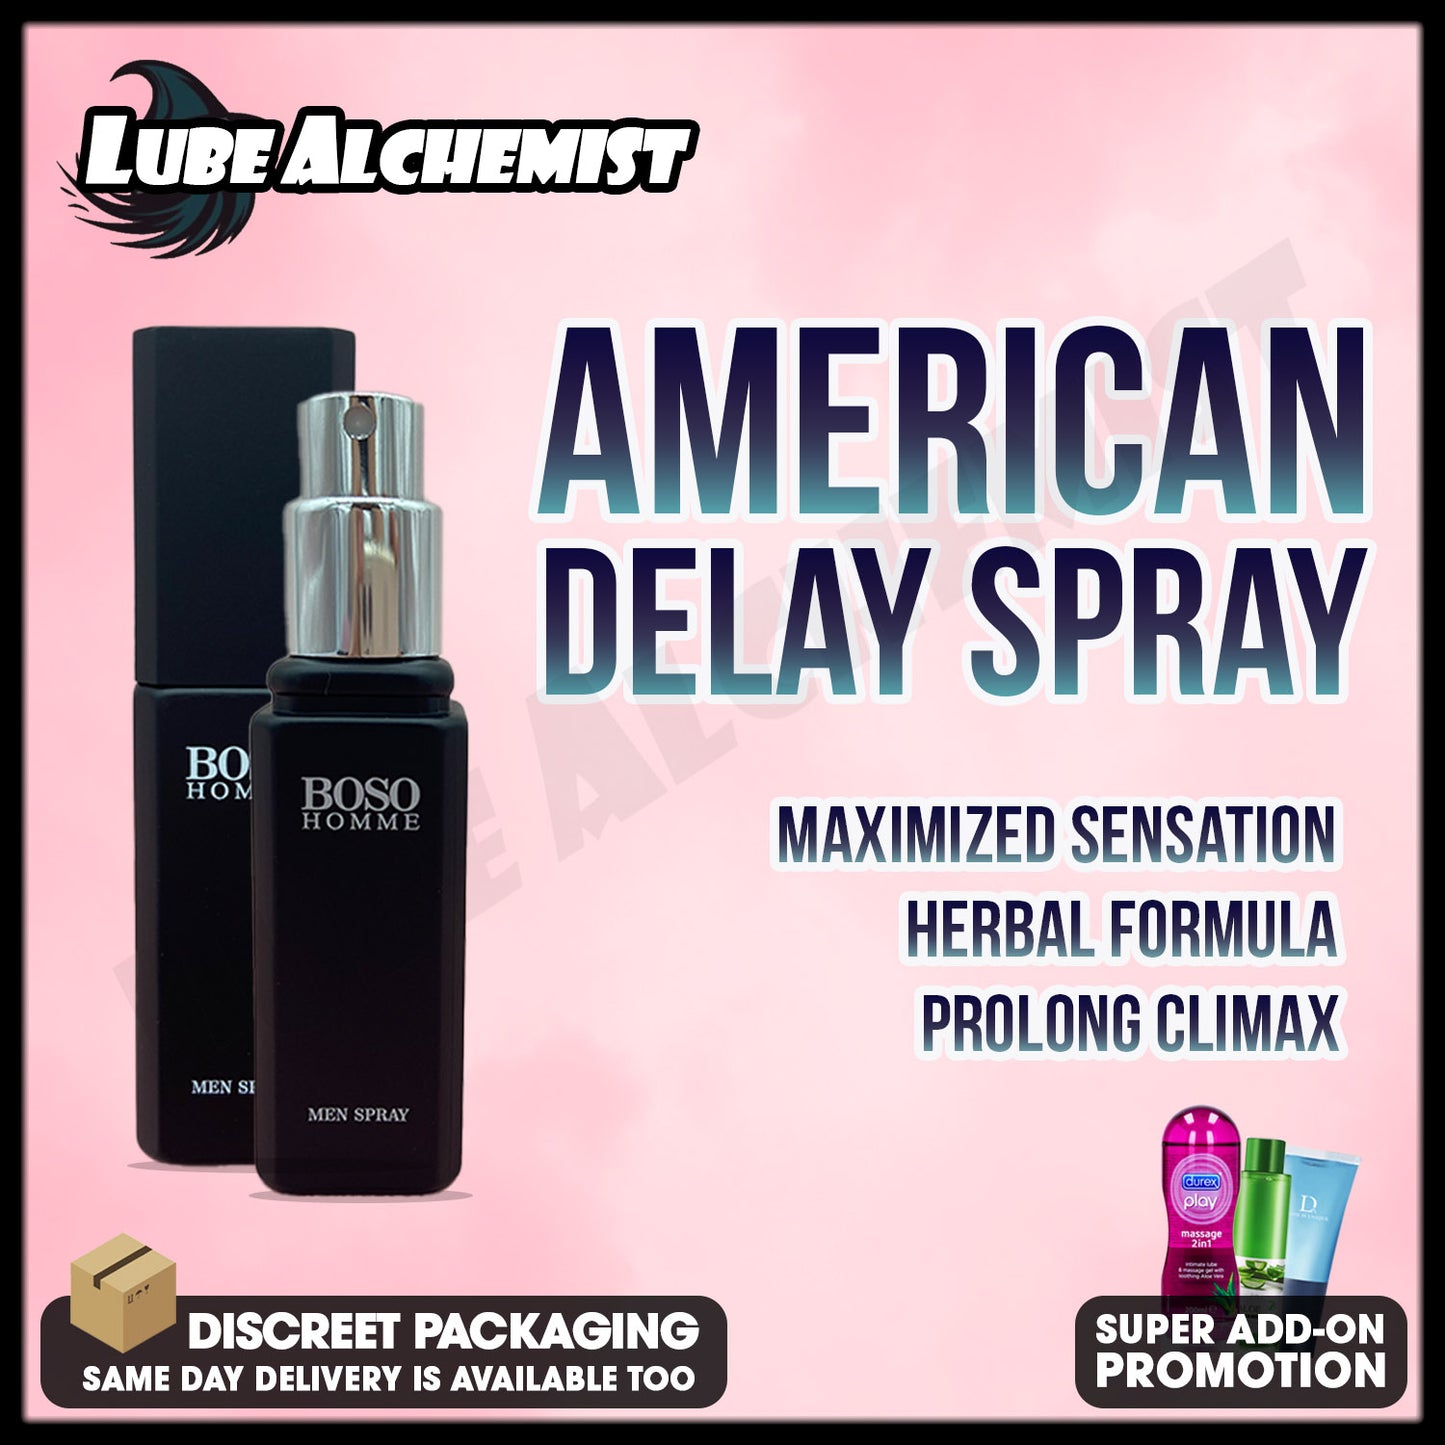 LubeAlchemist™ BOSO HOMME Delay Spray Maximize Sesation Herbal Formula